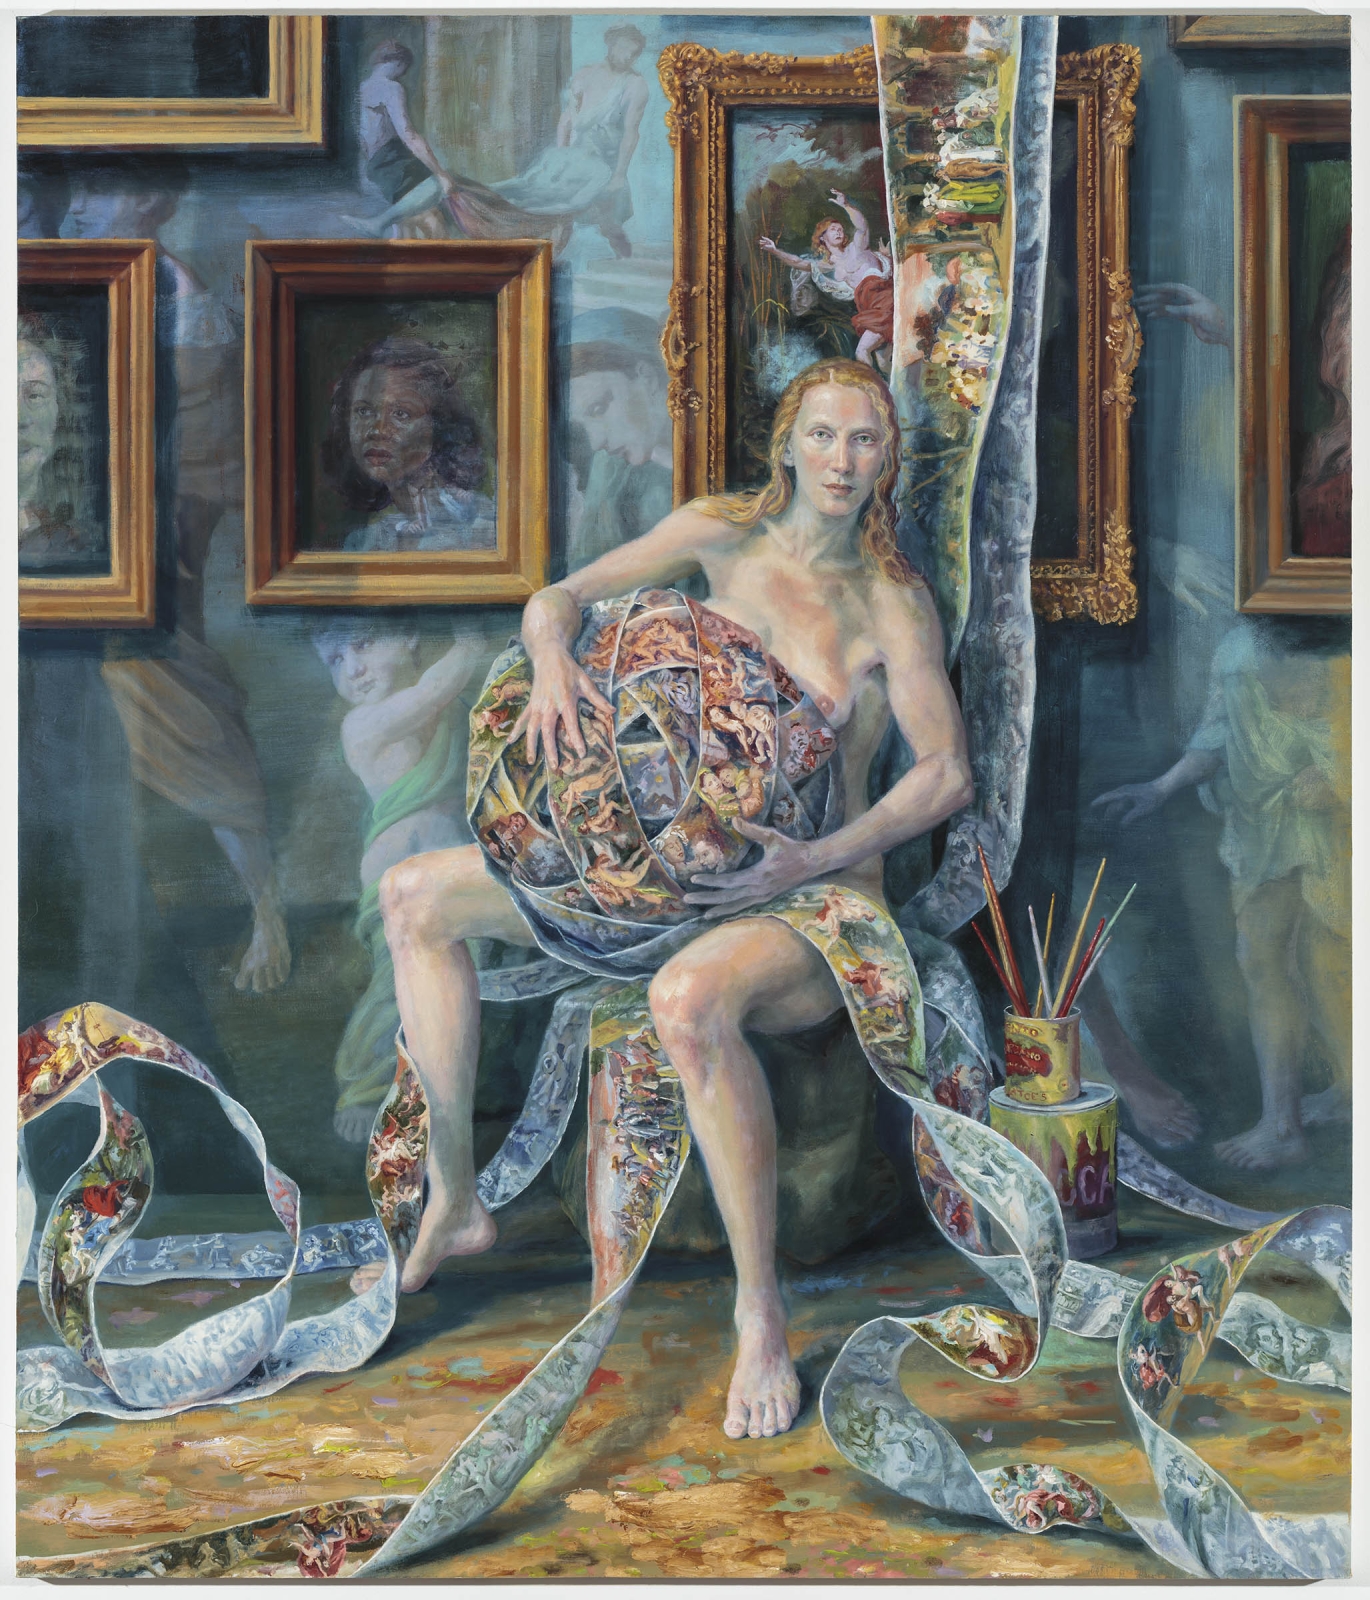 Julie Heffernan
Self-Portrait with Lock, 2018
Oil on canvas
68 x 58 inches